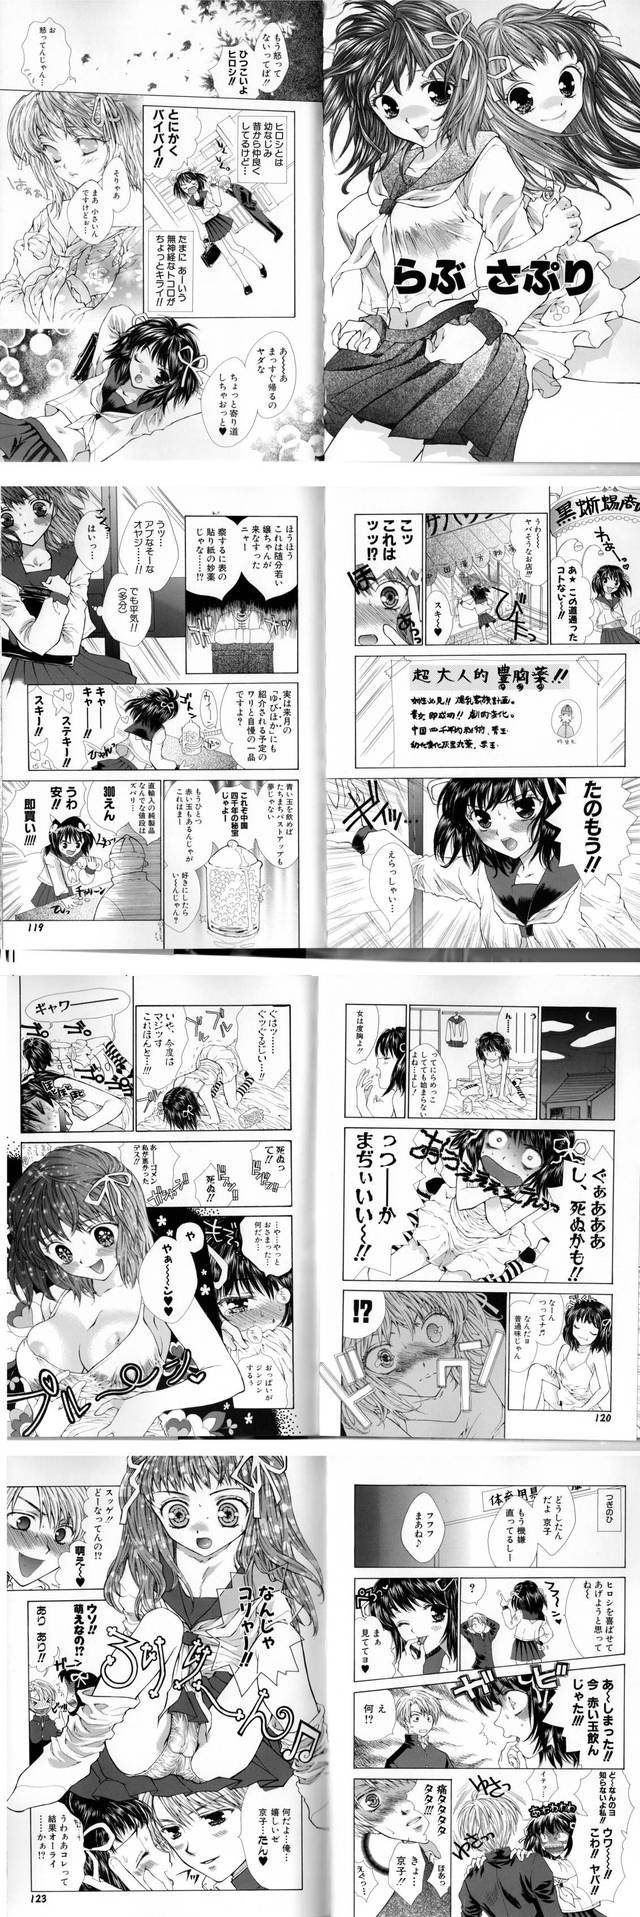 comic manga porn manga porn media comic